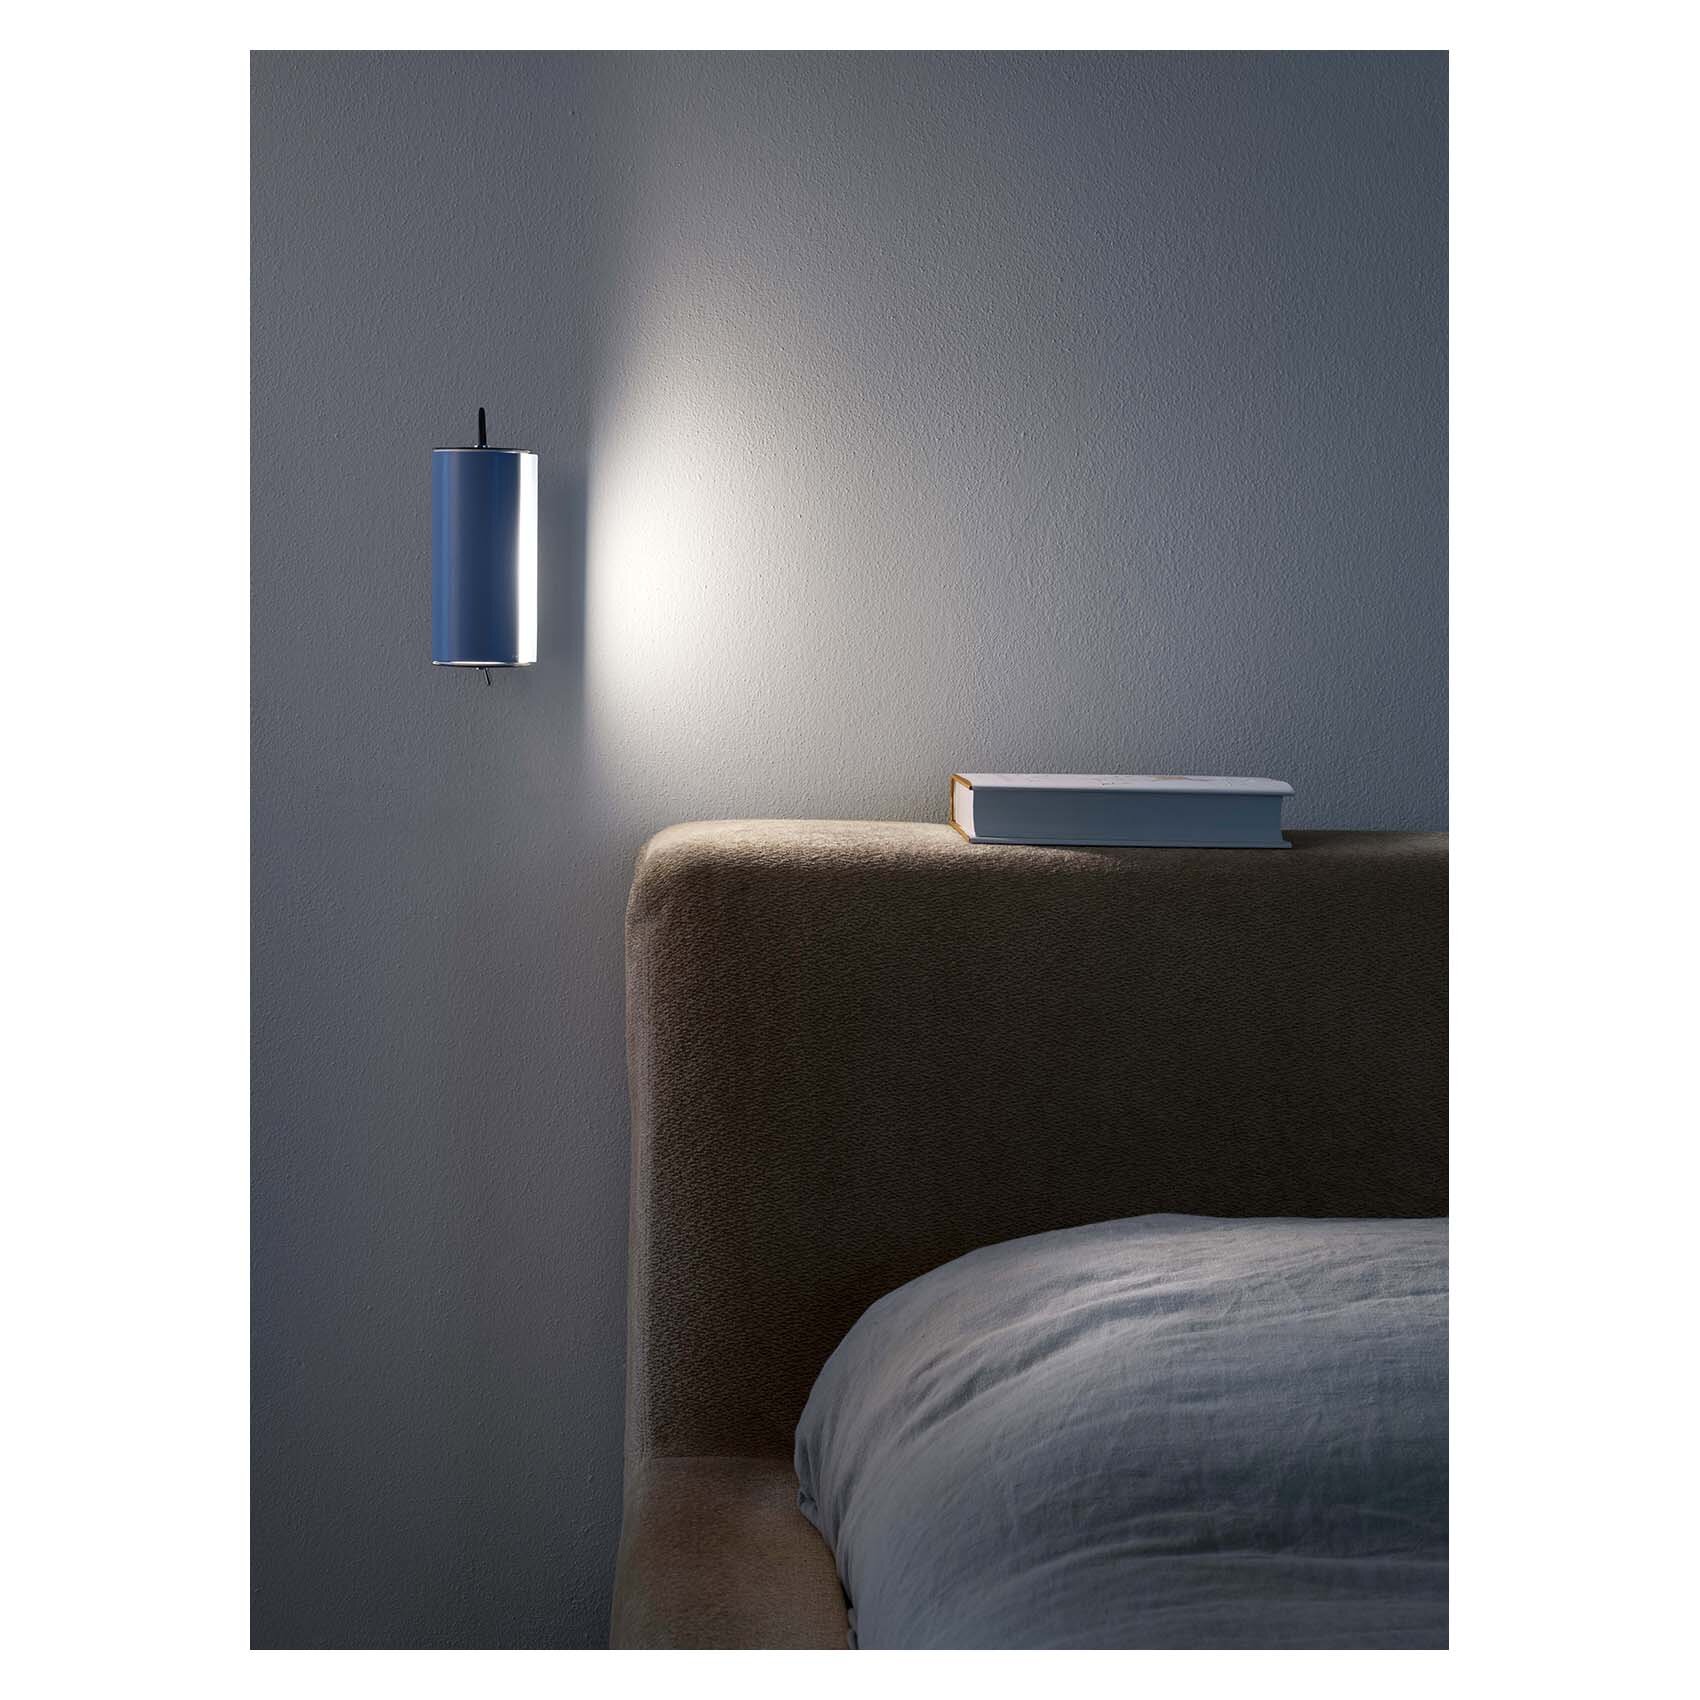 NEMO Applique Cylindrique 壁燈用於床頭照明